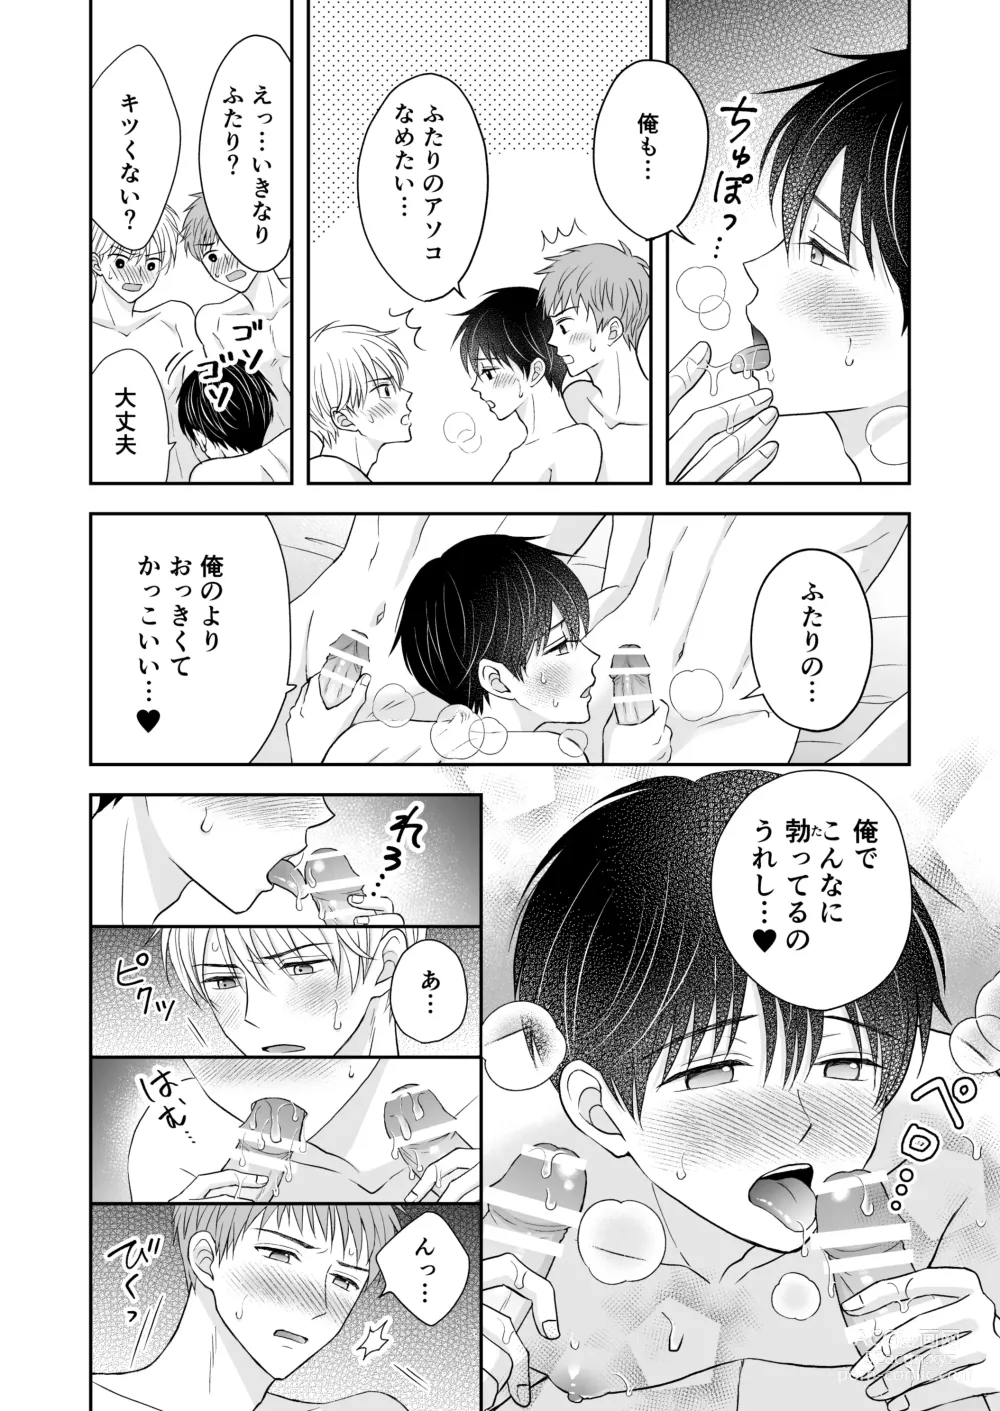 Page 13 of doujinshi 3-nin wa Nakayoshi